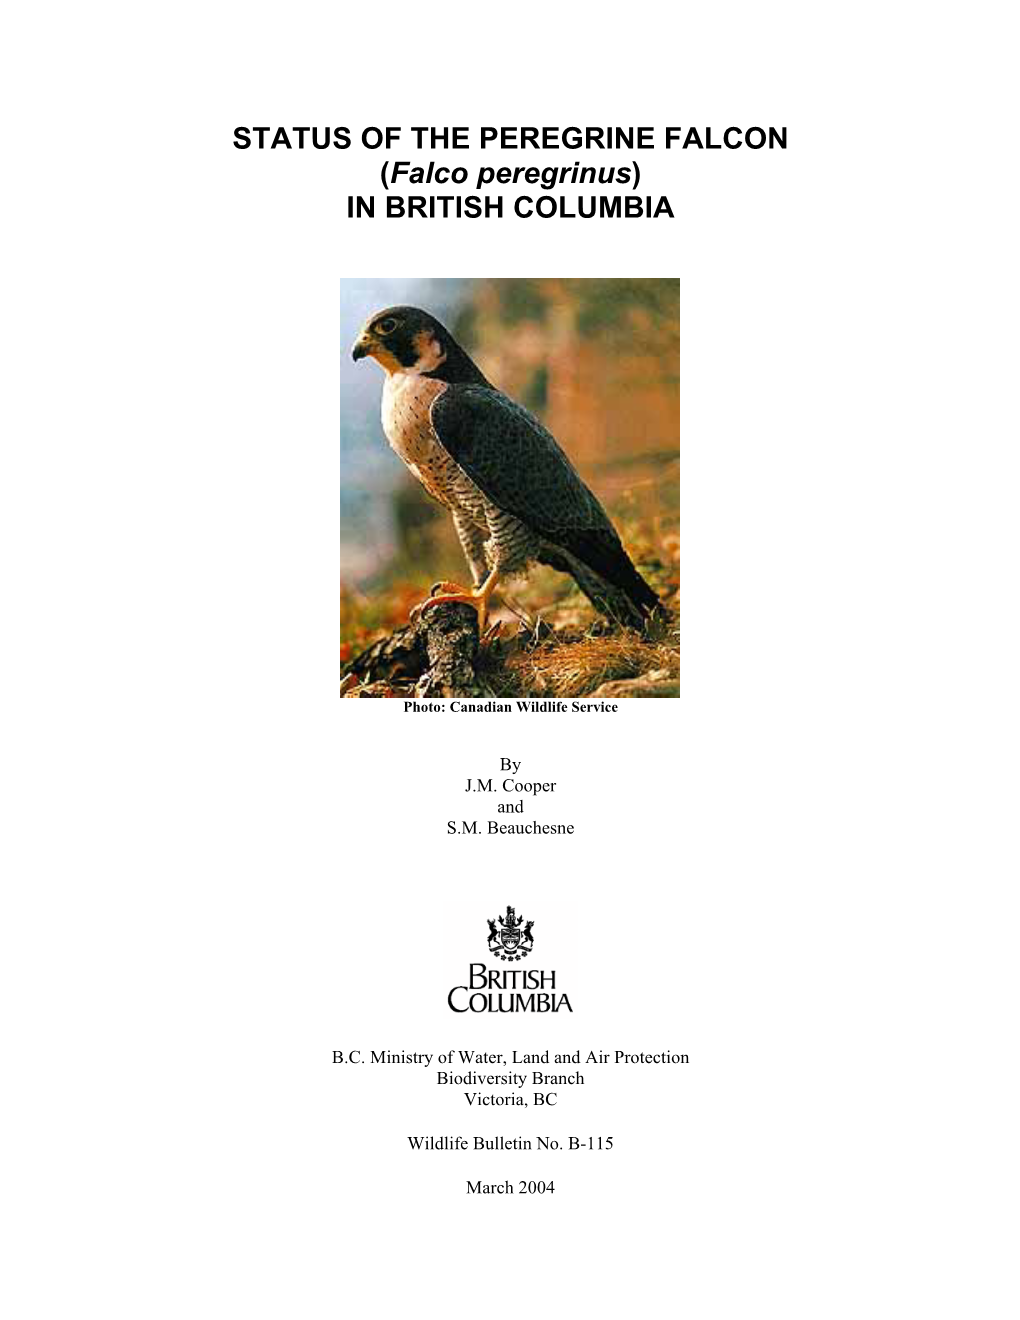 Status of the Prairie Falcon in British Columbia